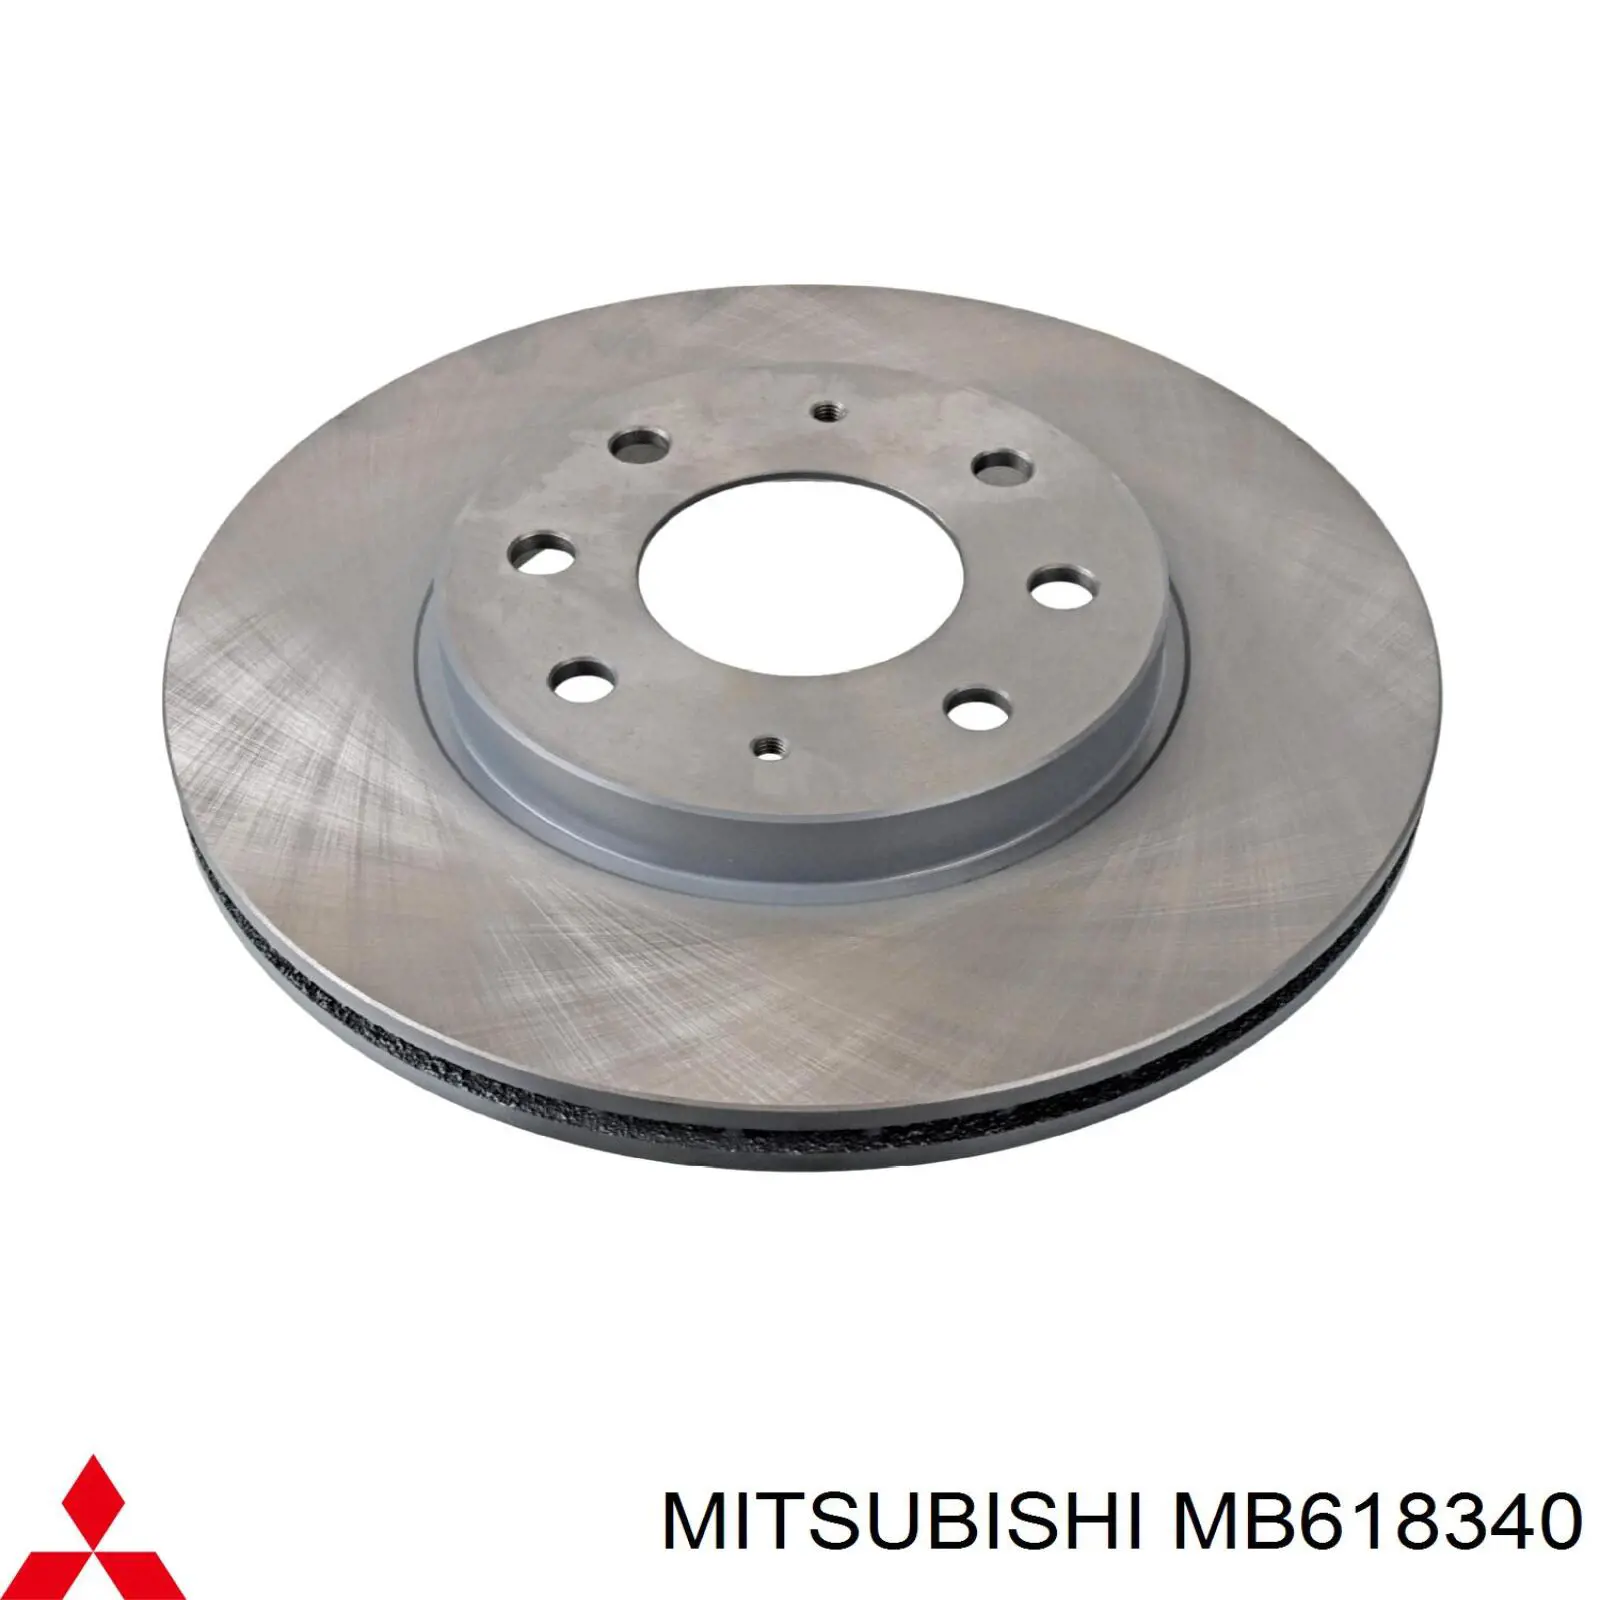 MB618340 Mitsubishi disco de freno delantero